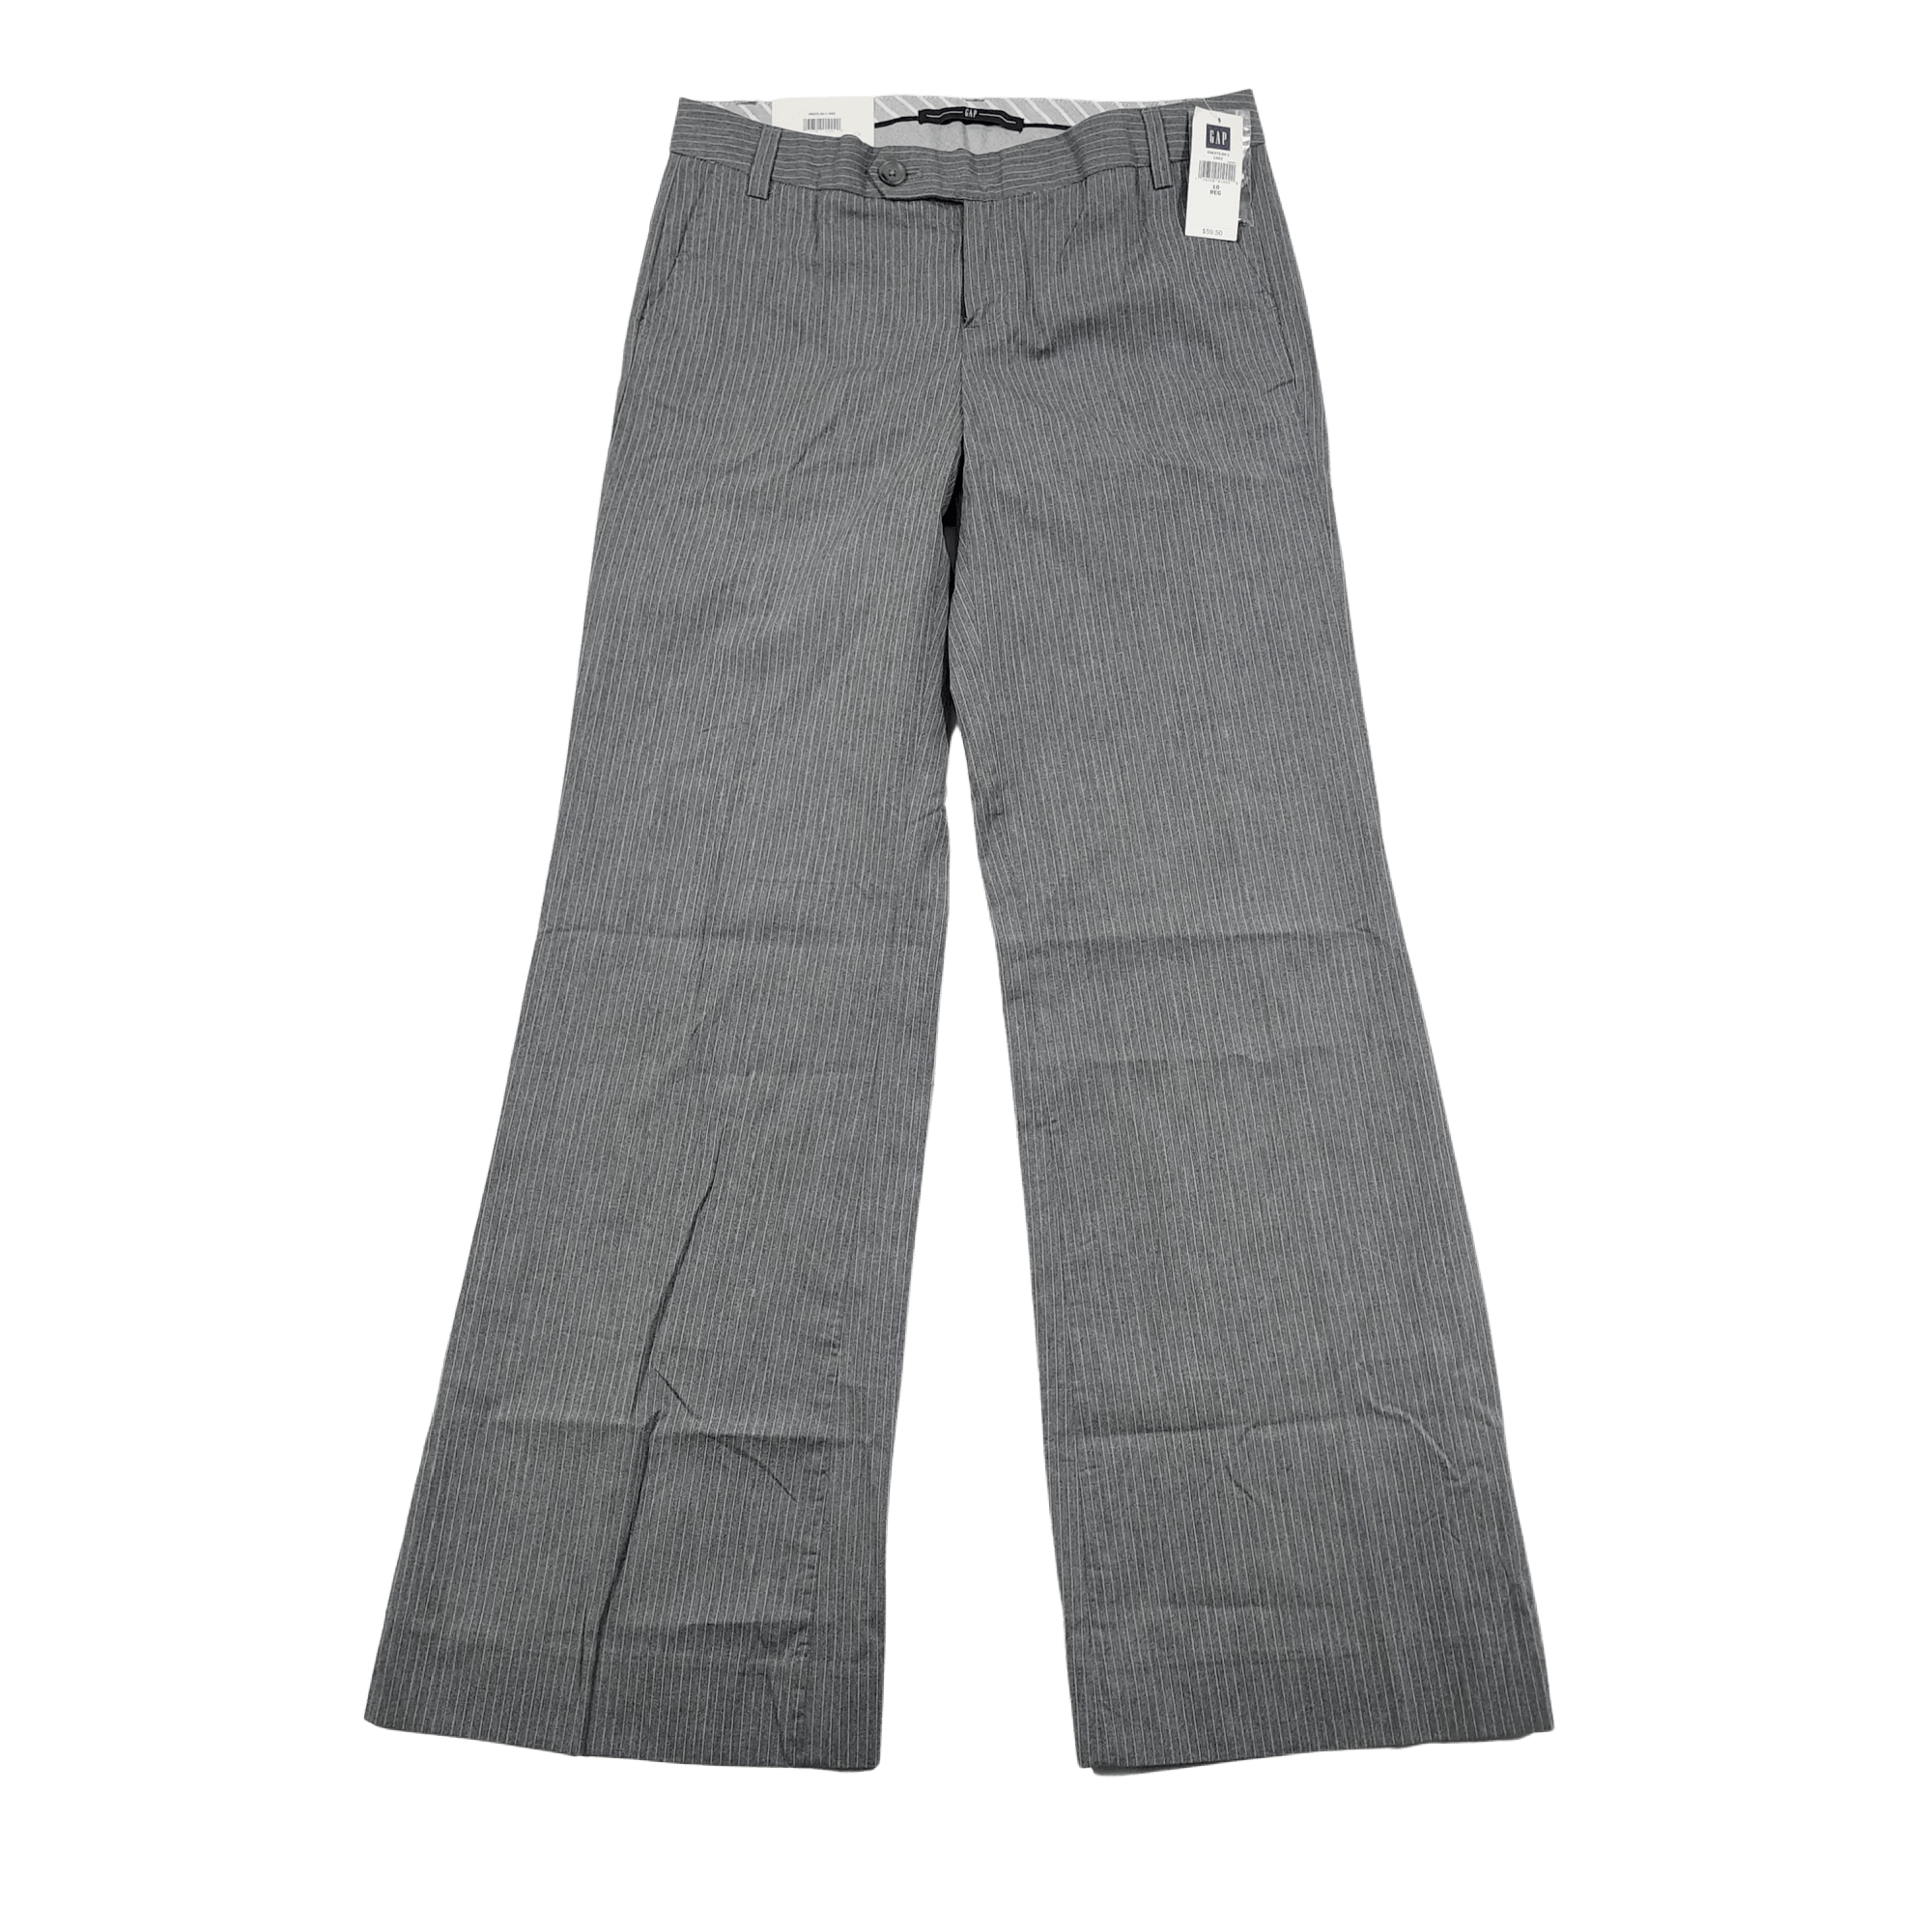 Ladies Linen Pants Summer High Waist Trousers Size 10-20 Plus Size Khaki  Green | eBay